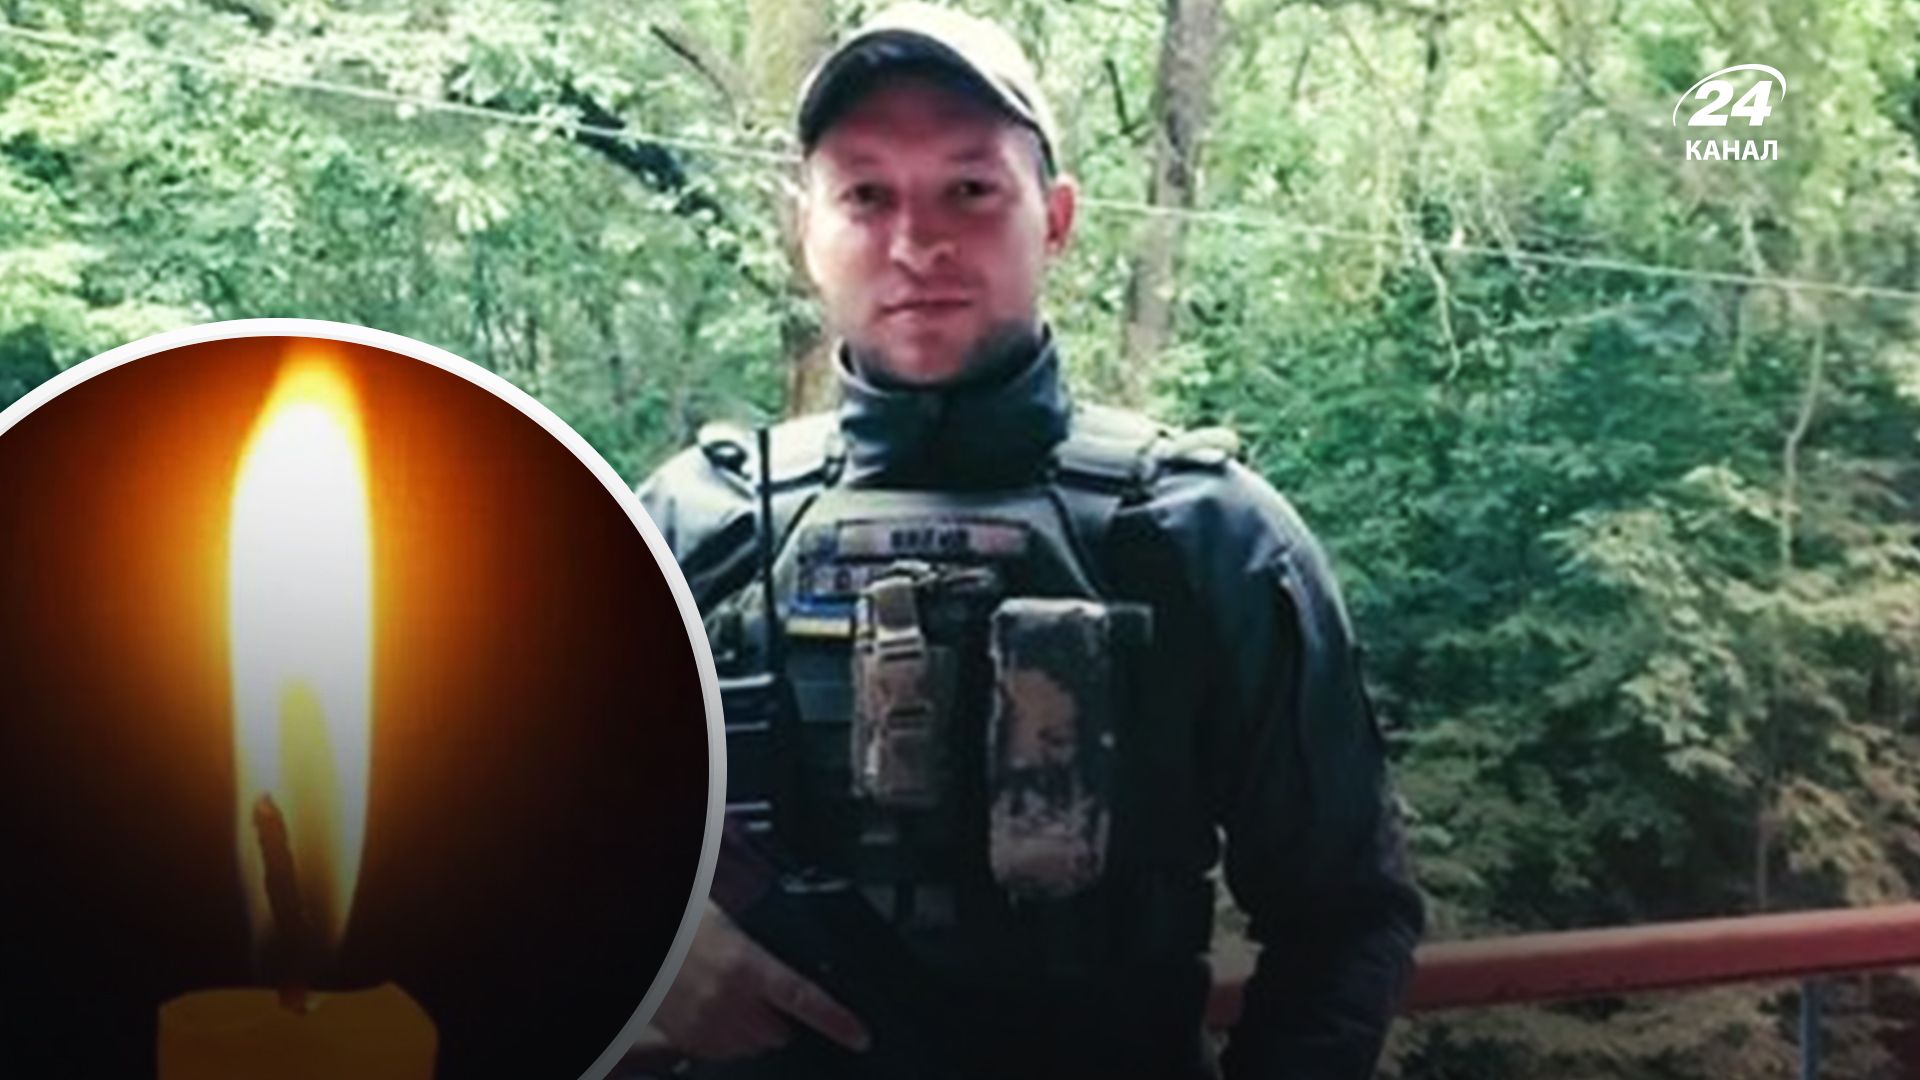  Руслан Карпюк загинув, захищаючи Україну - 24 Канал